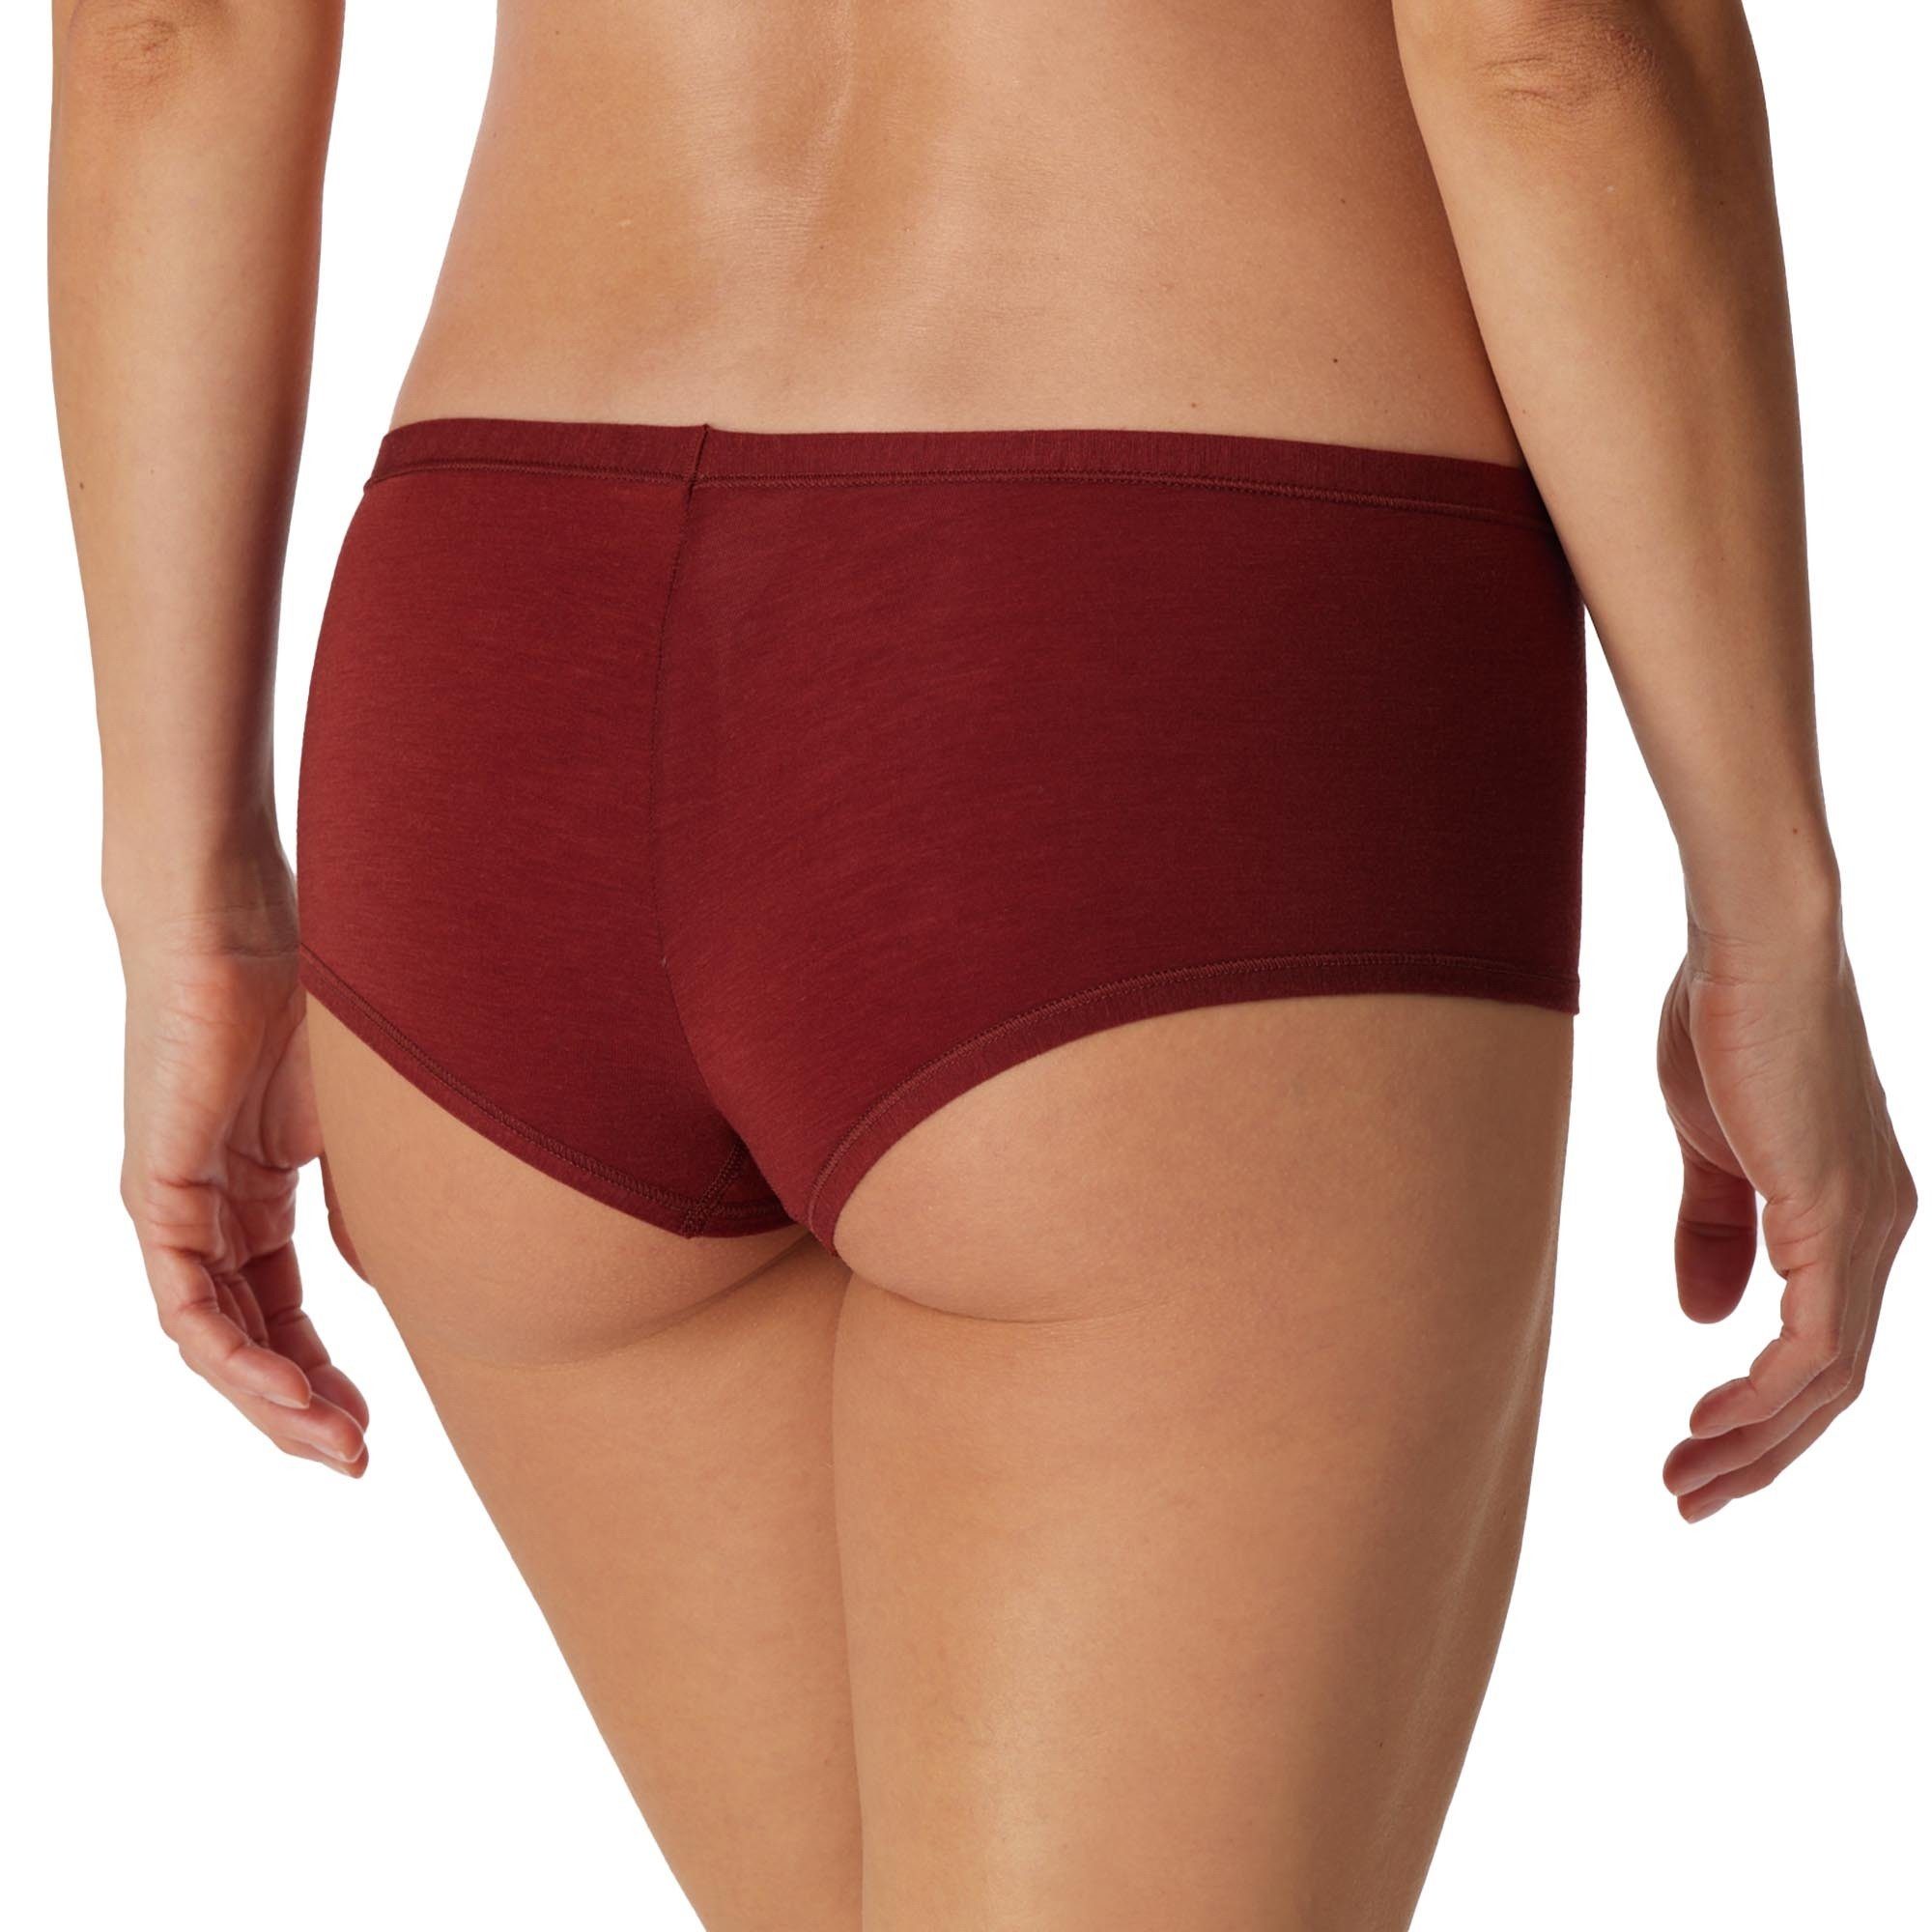 - Panty Damen Personal Terracotta Pants, Shorts Unterhose, Schiesser Slip,